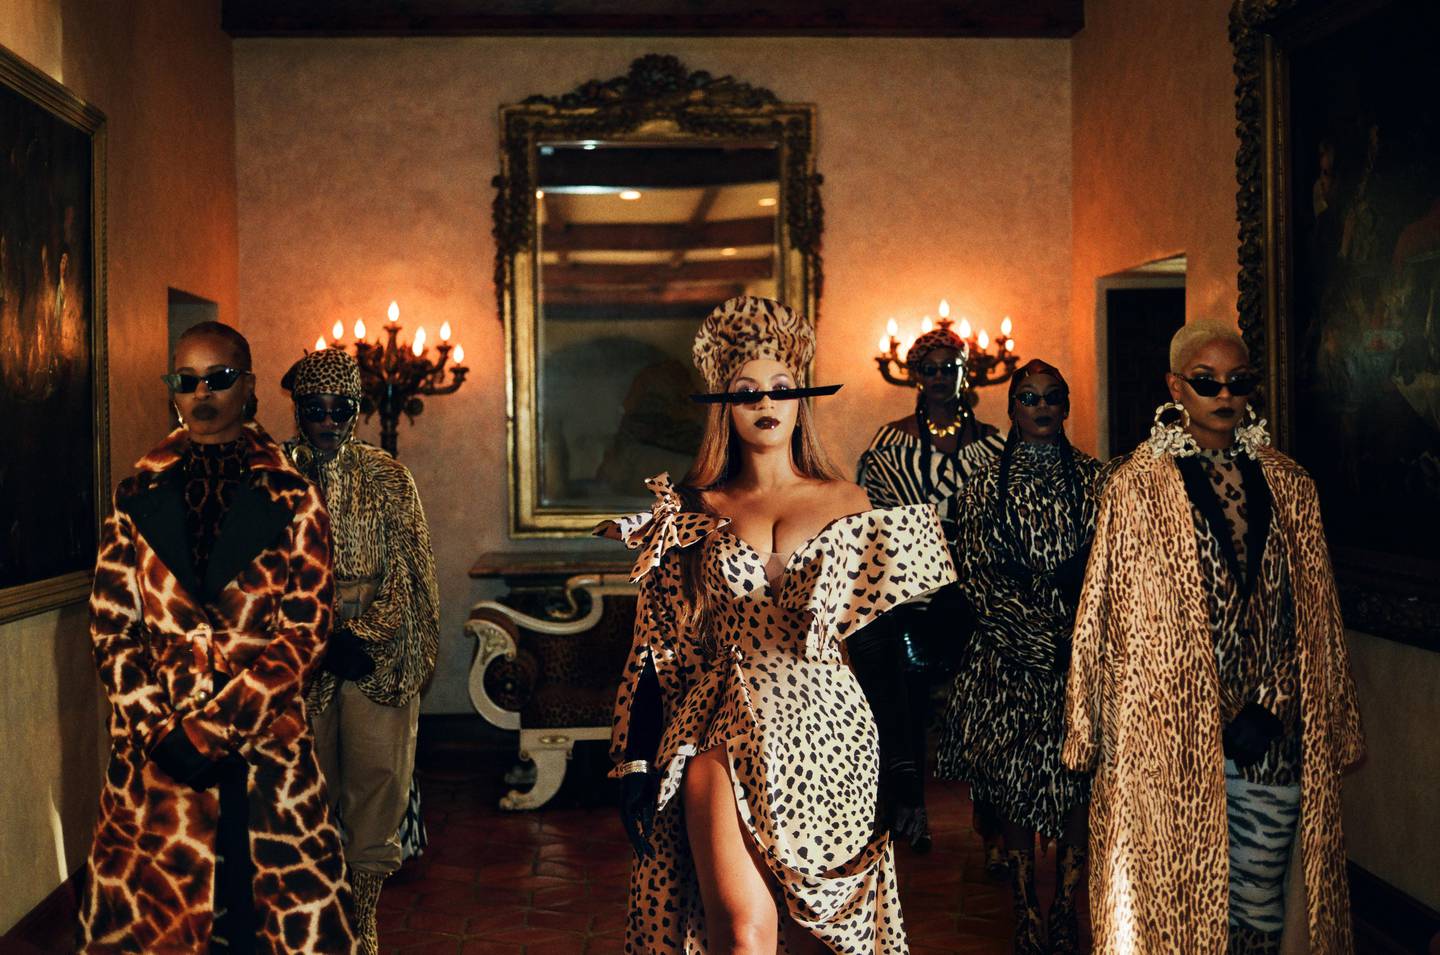 Beyoncé in “Mood 4 Eva” from the visual album BLACK IS KING on Disney+